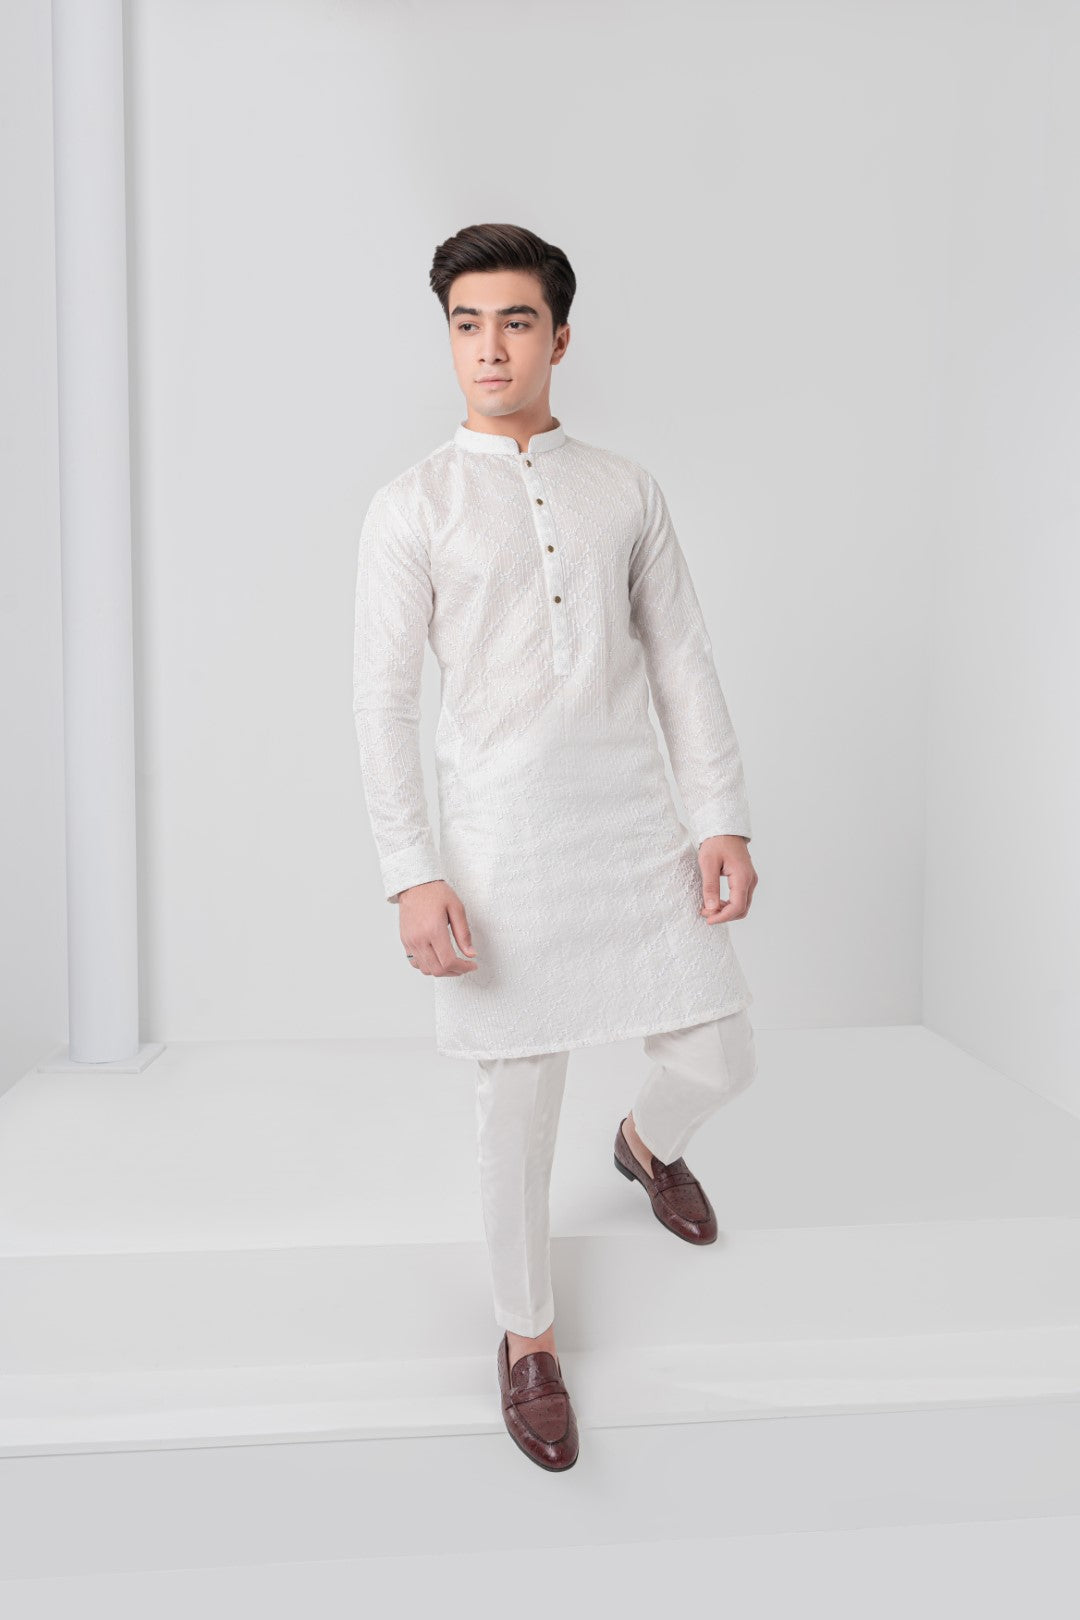 white cross design embroidered kurta and plain trouser.